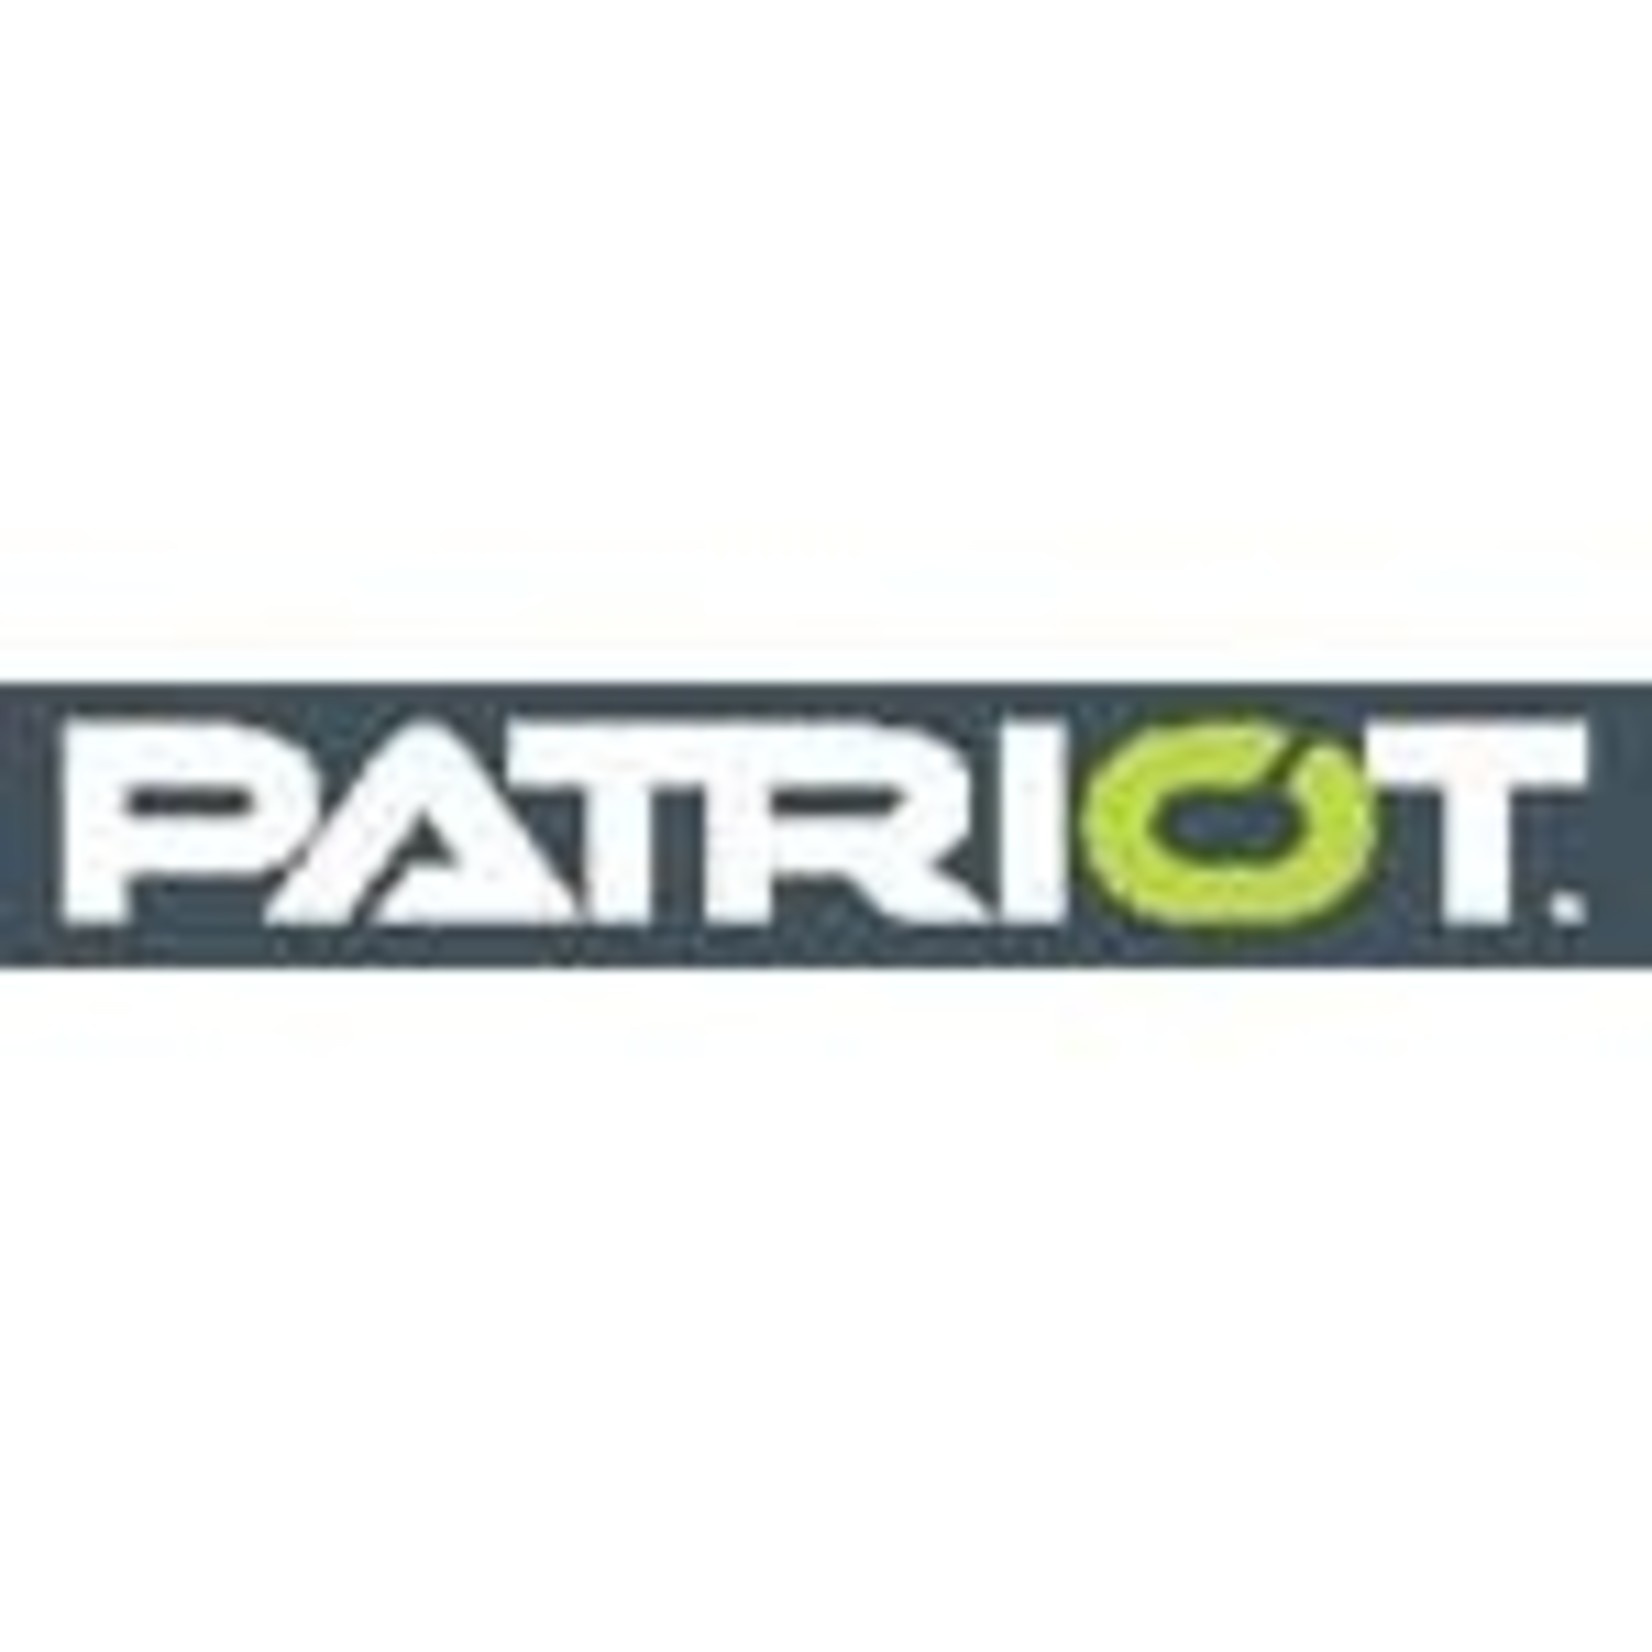 Patriot Patriot Wrap Around T-Post Claw Insulator